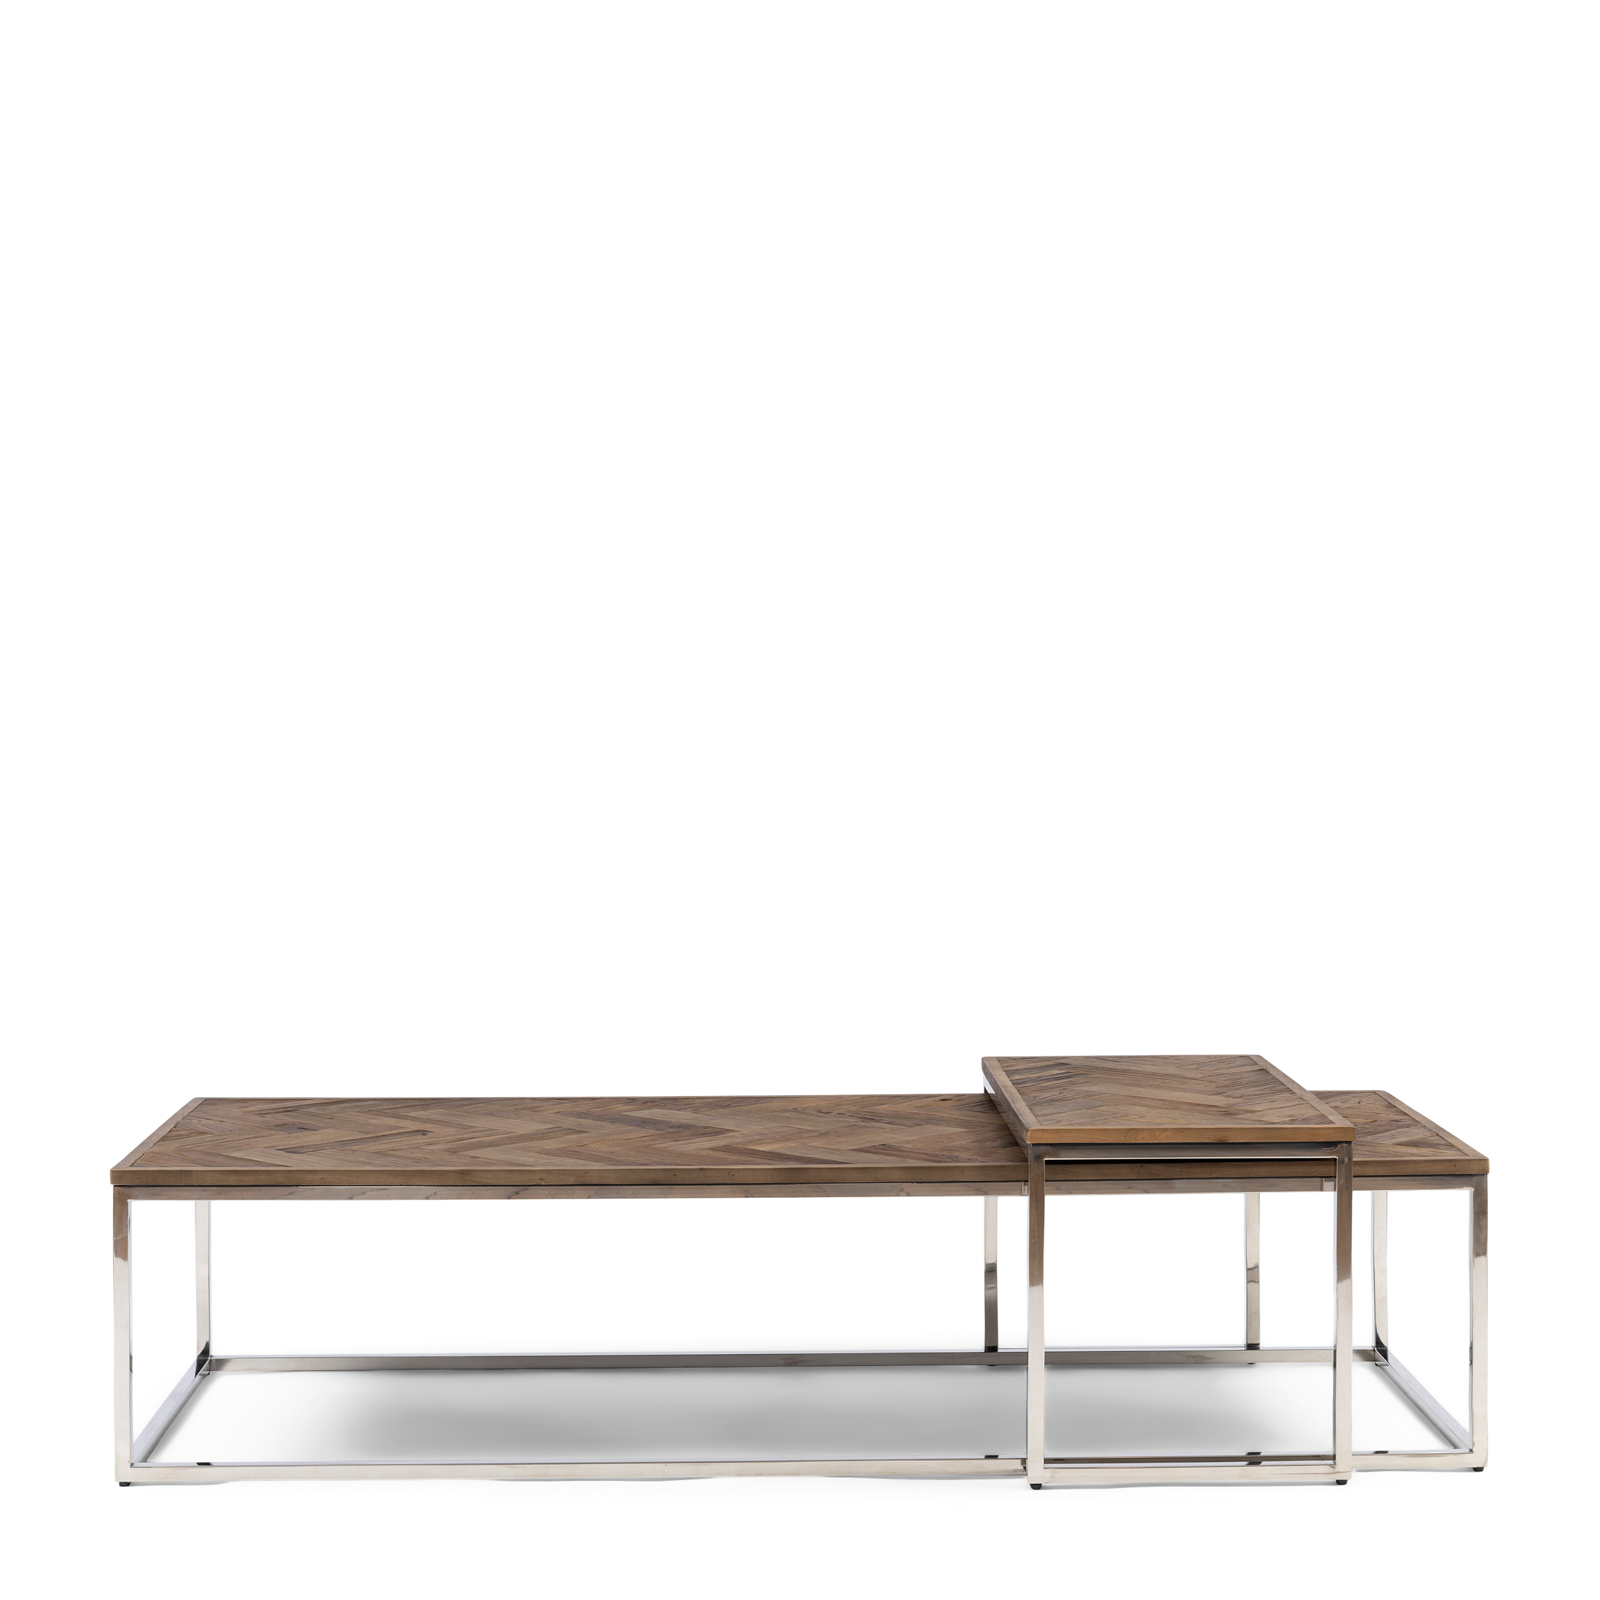 Bushwick Coffee Table Set of 2, 170x70 cm